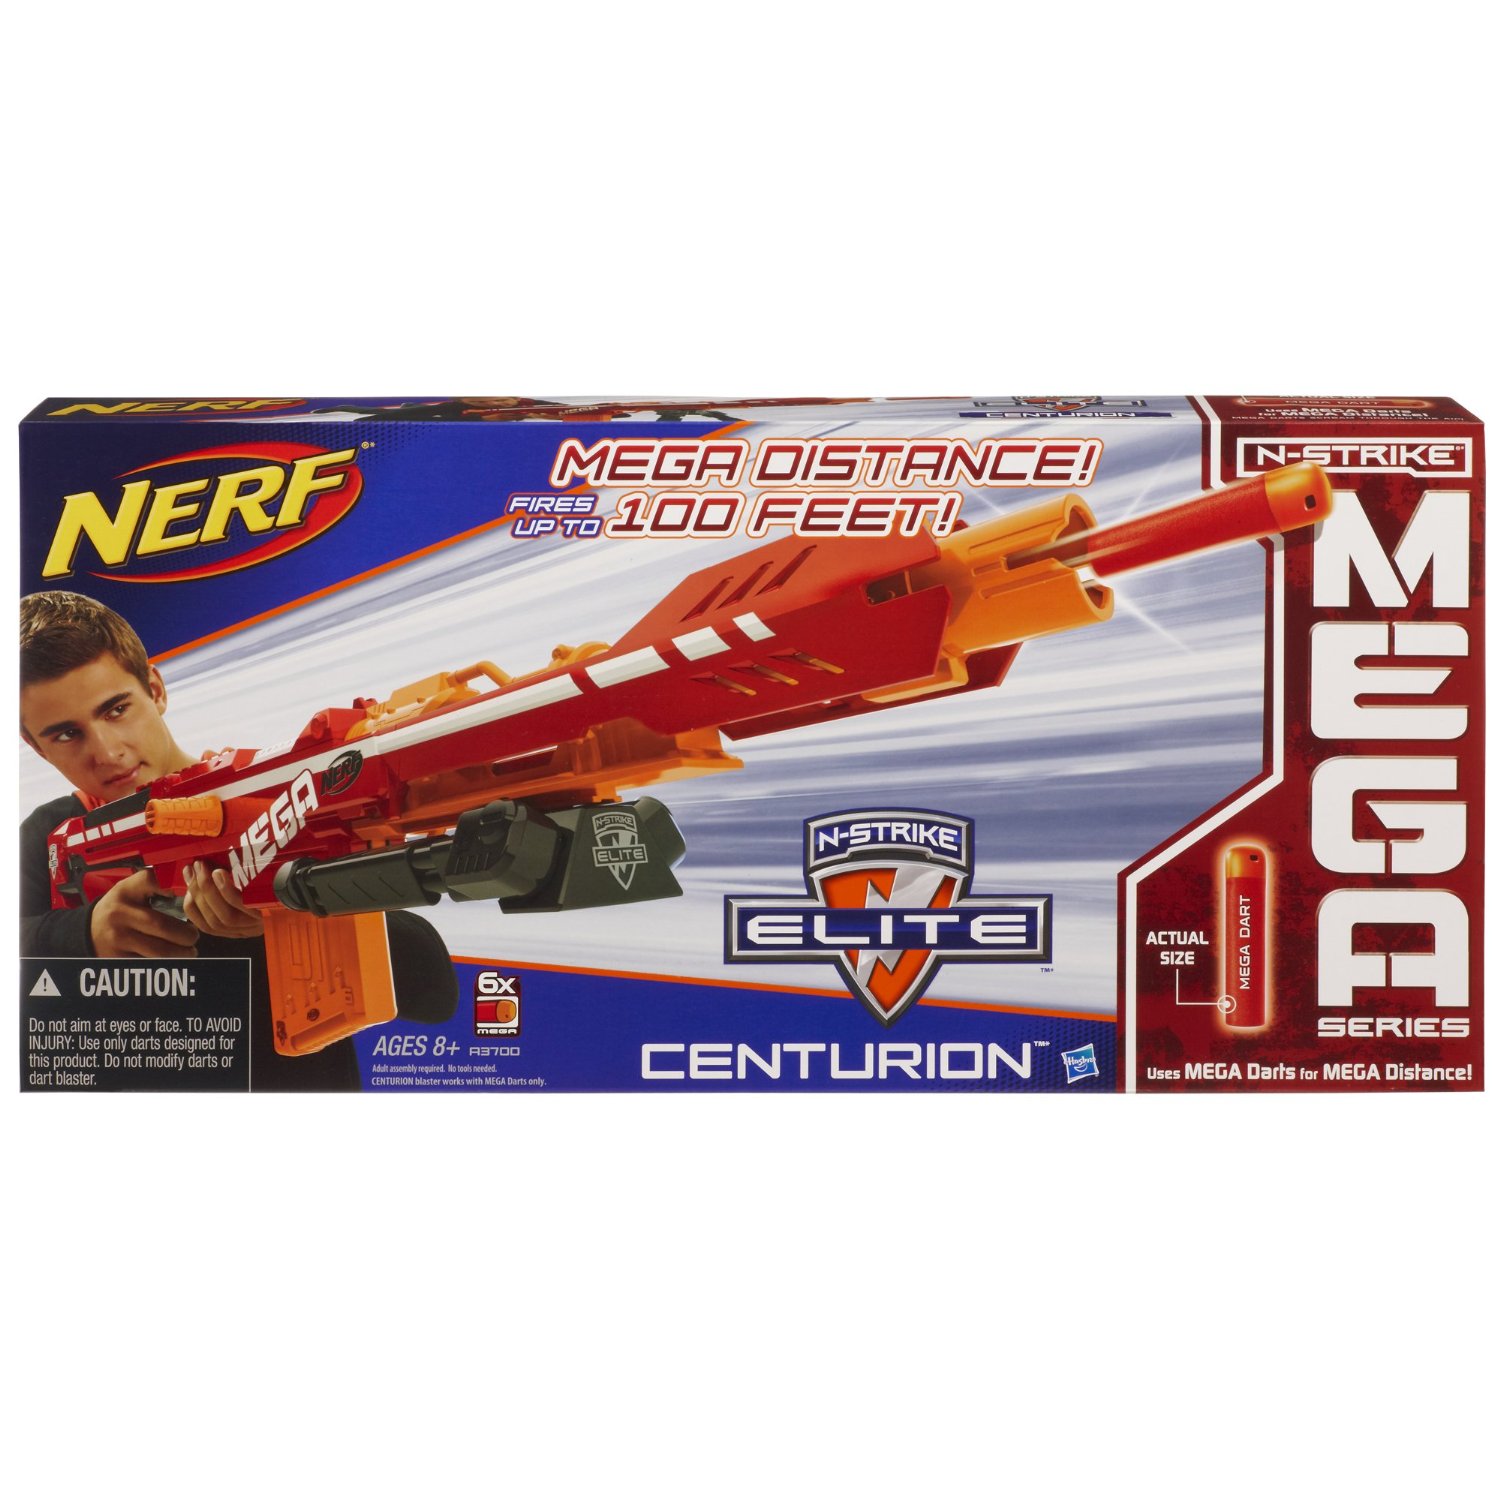 NERF N-Strike Elite Sonic Ice Centurion Blaster – One-Touch Top